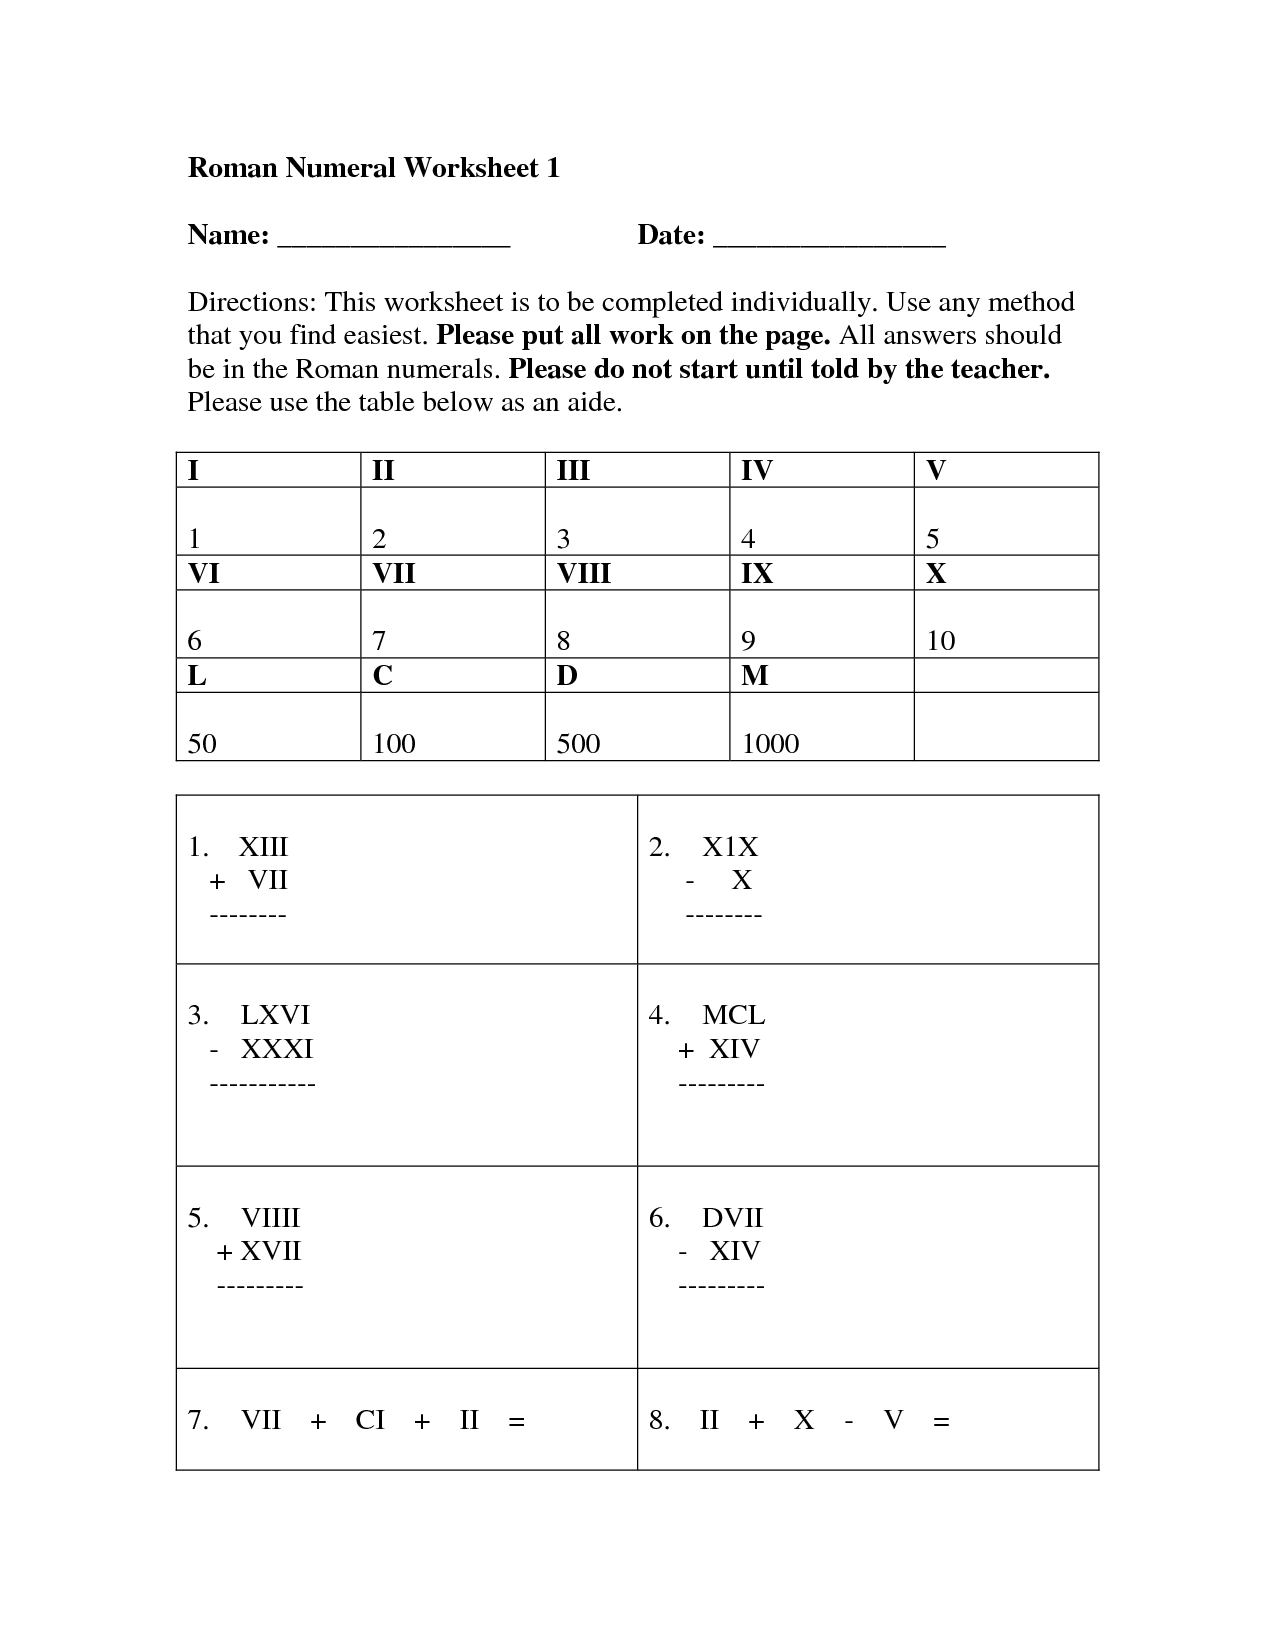 Roman Numerals Printable Worksheets Image